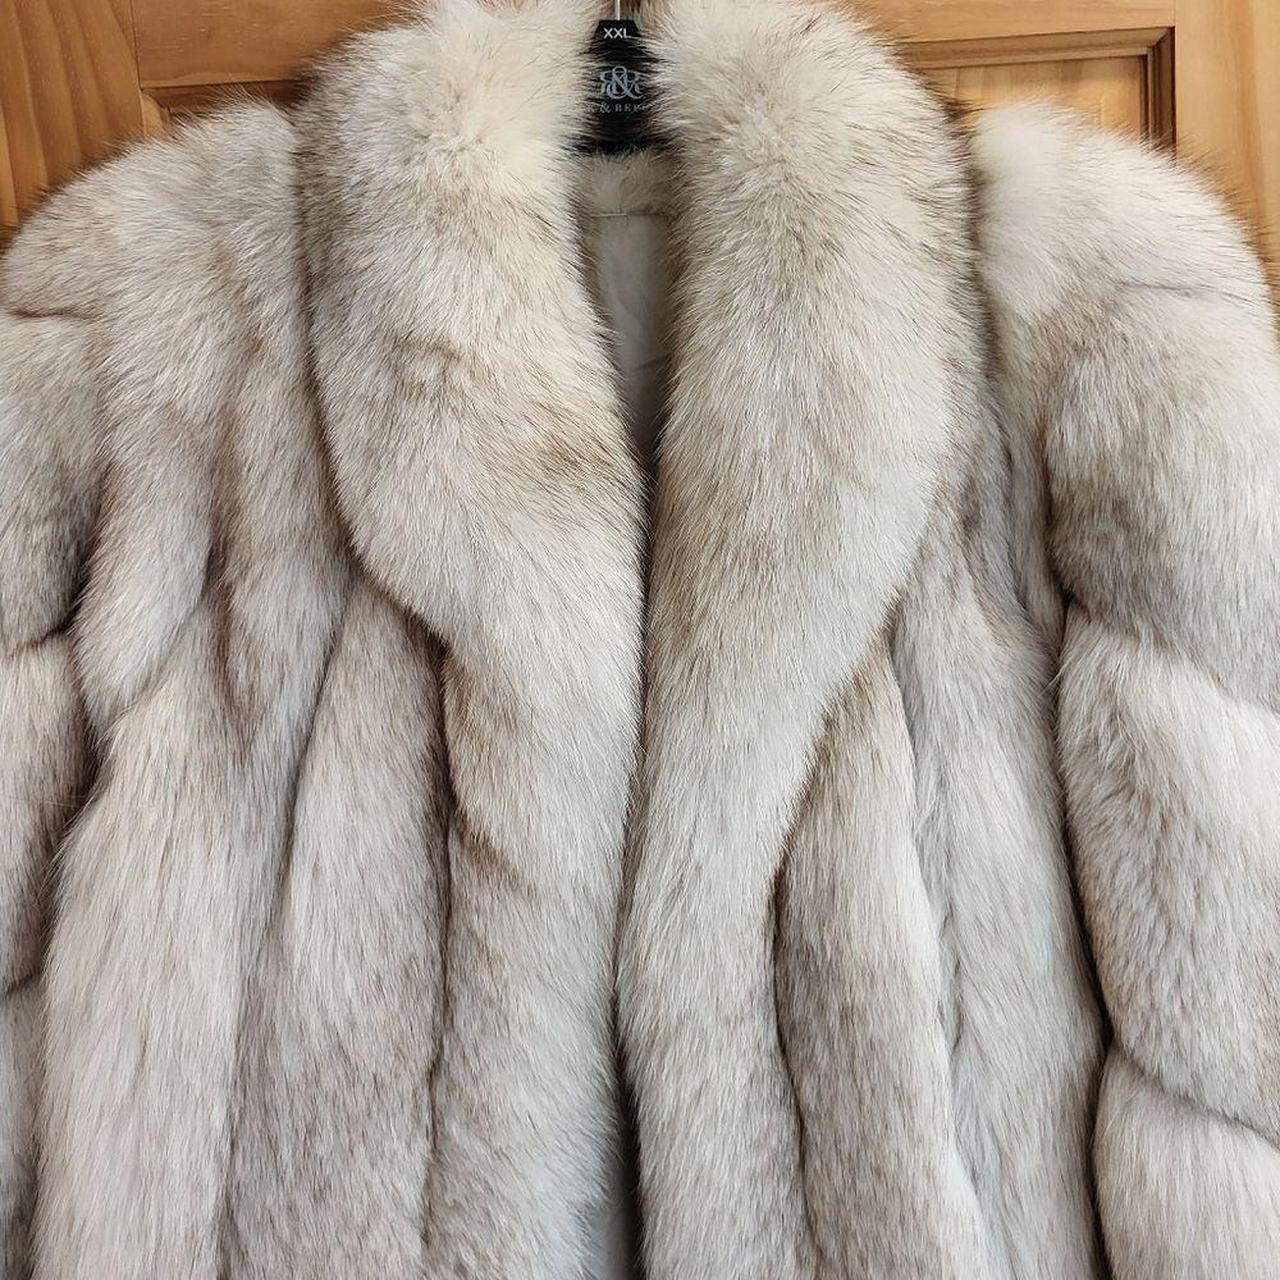 Fox Fur Coat authentic exterior Fox fur in very good... - Depop